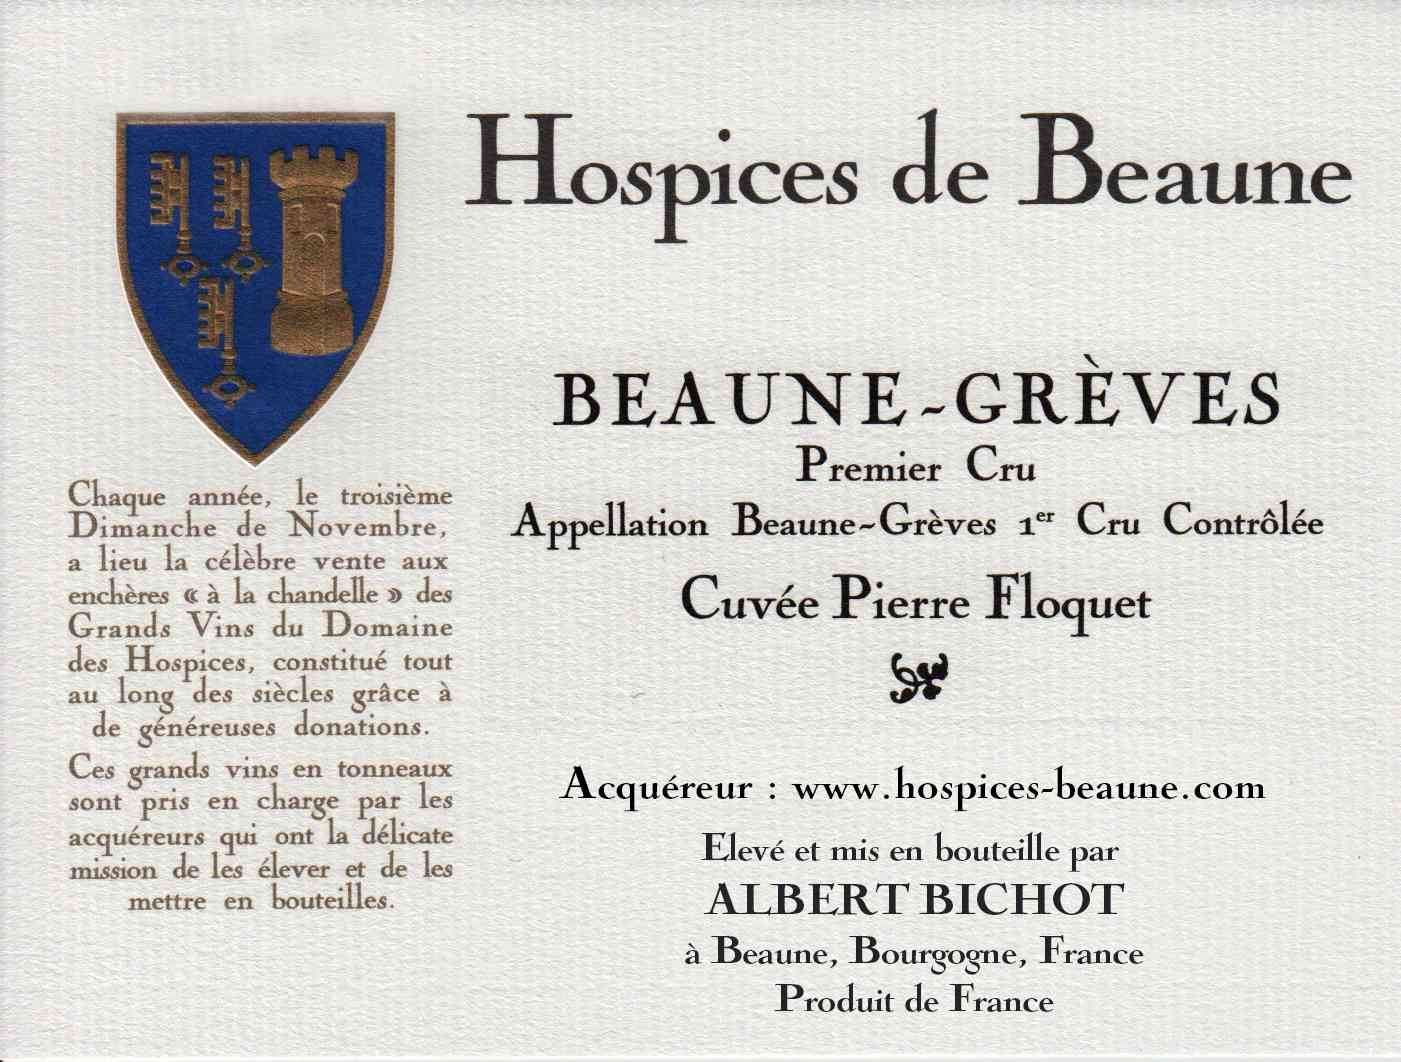 Encheres-auction-HospicesdeBeaune-AlbertBichot-BeauneGreves1erCru-Cuvee-PierreFloquet